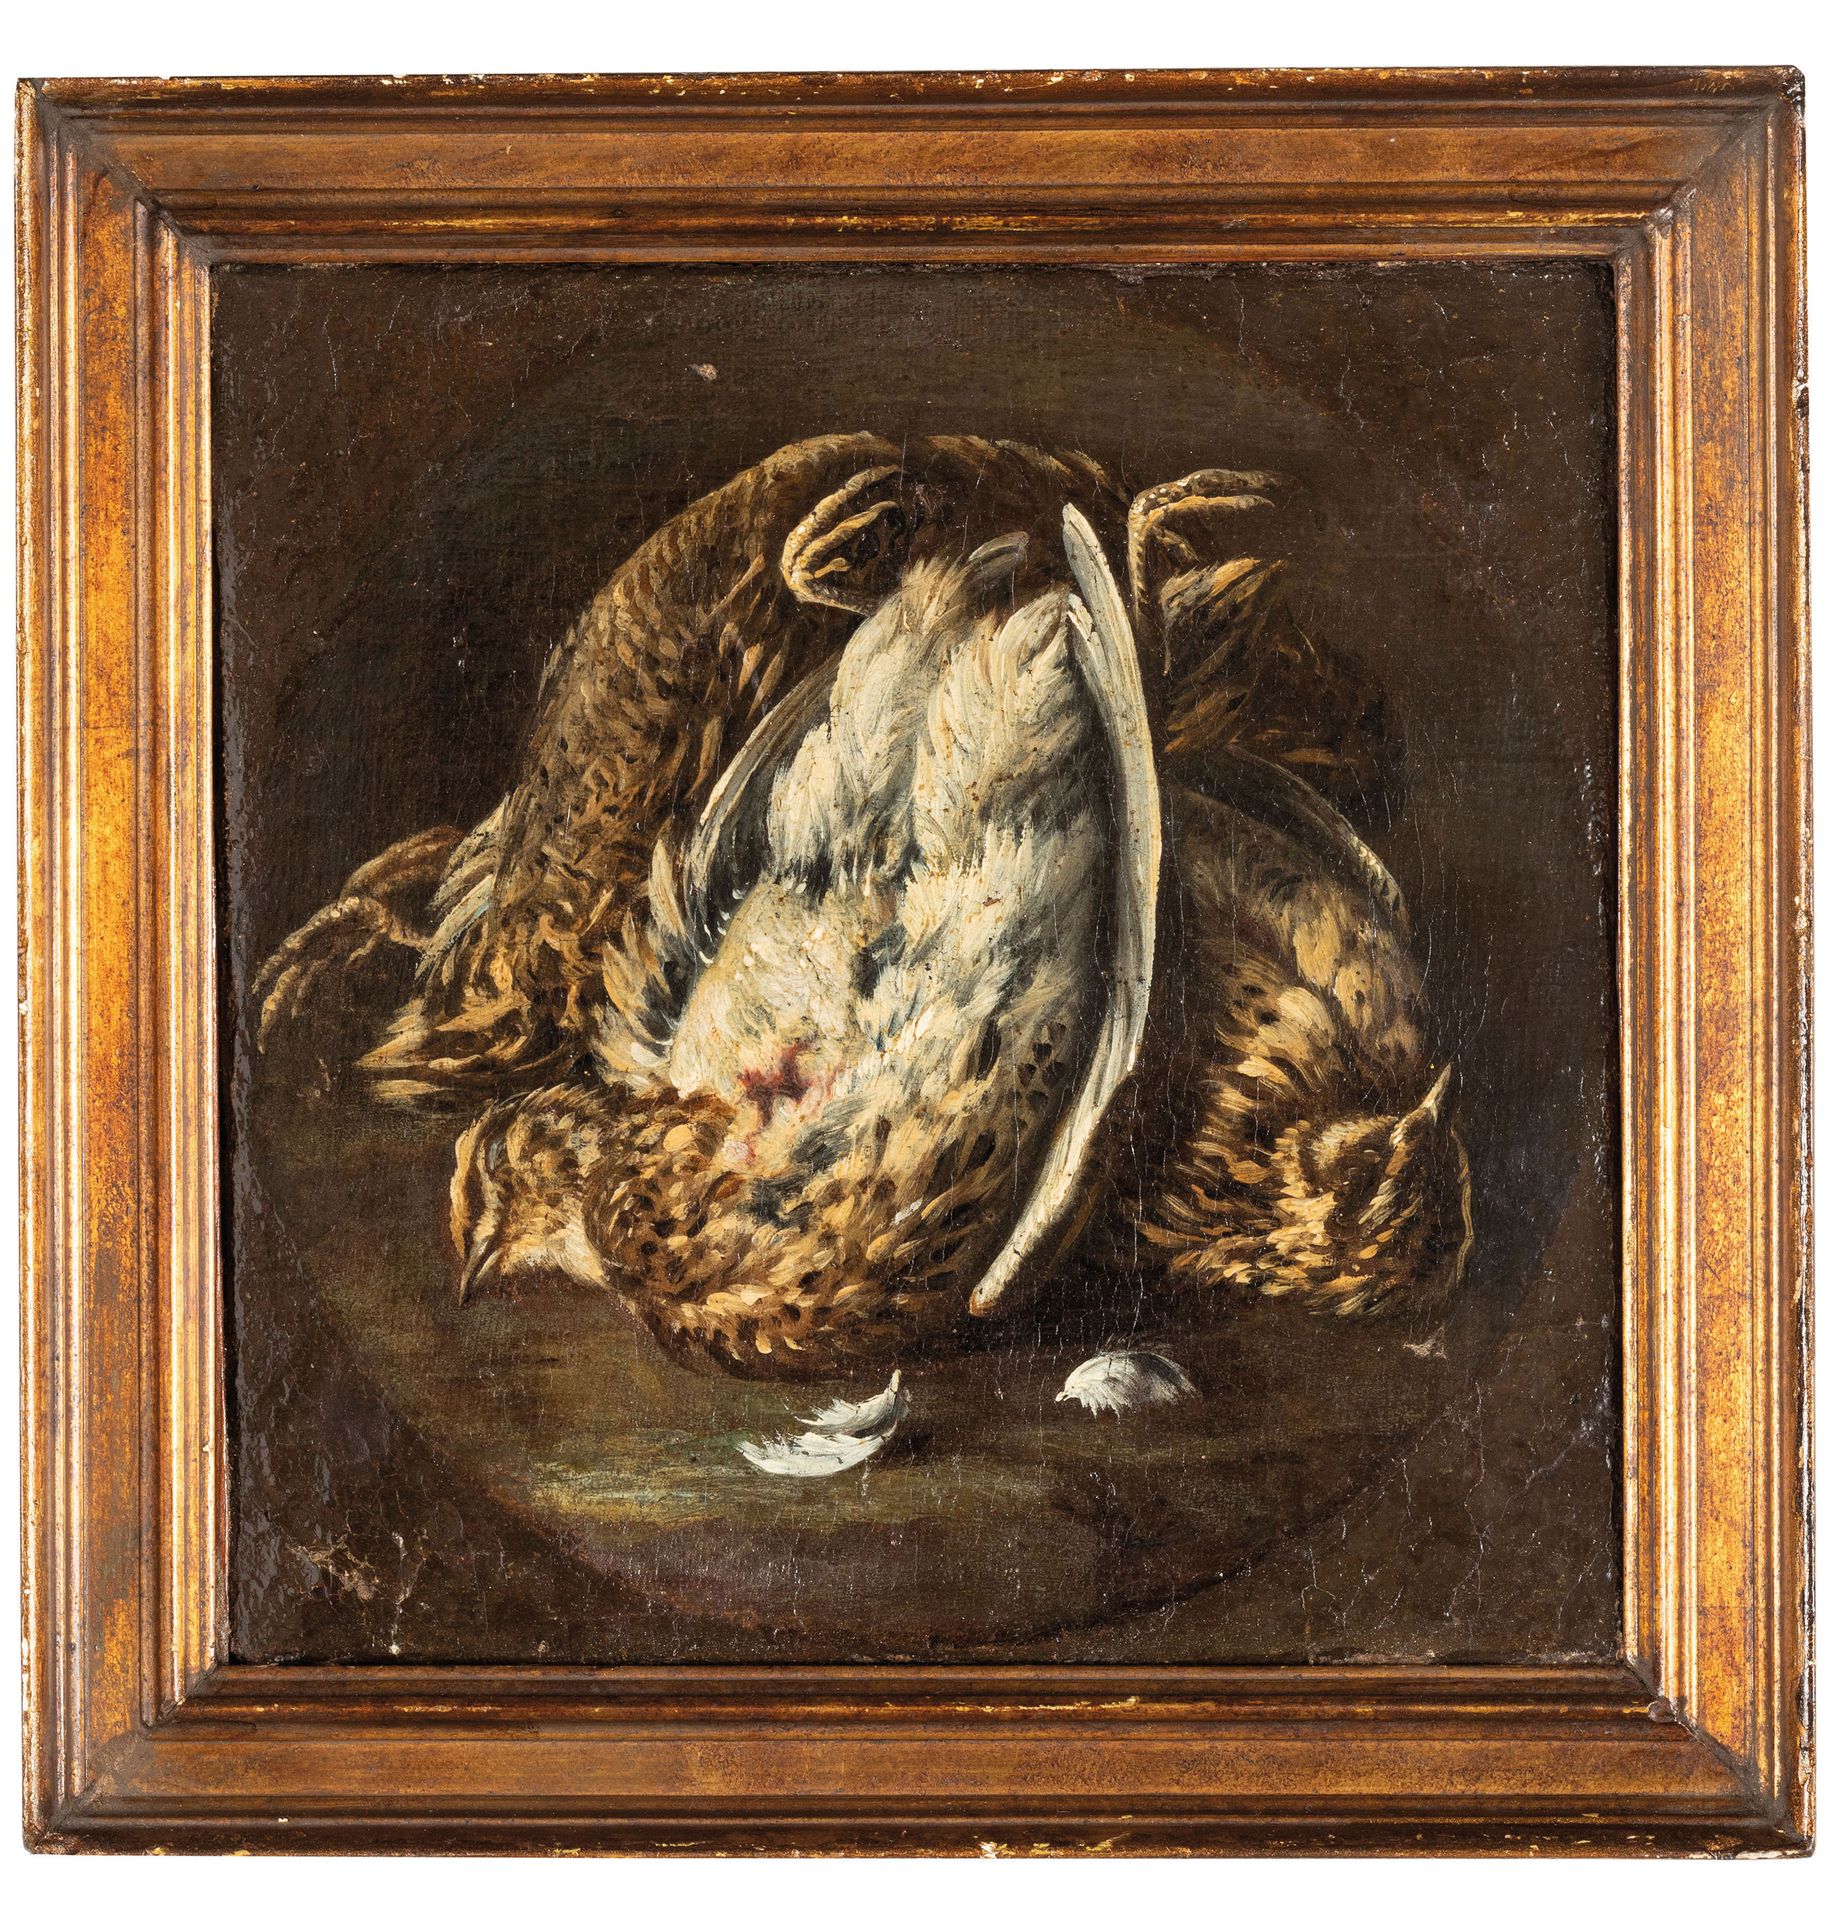 FELICE BOSELLI (attr. A) (Piacenza, 1651 - Parma, 1732)
Game
布面油画，21X21厘米

这幅作品描&hellip;